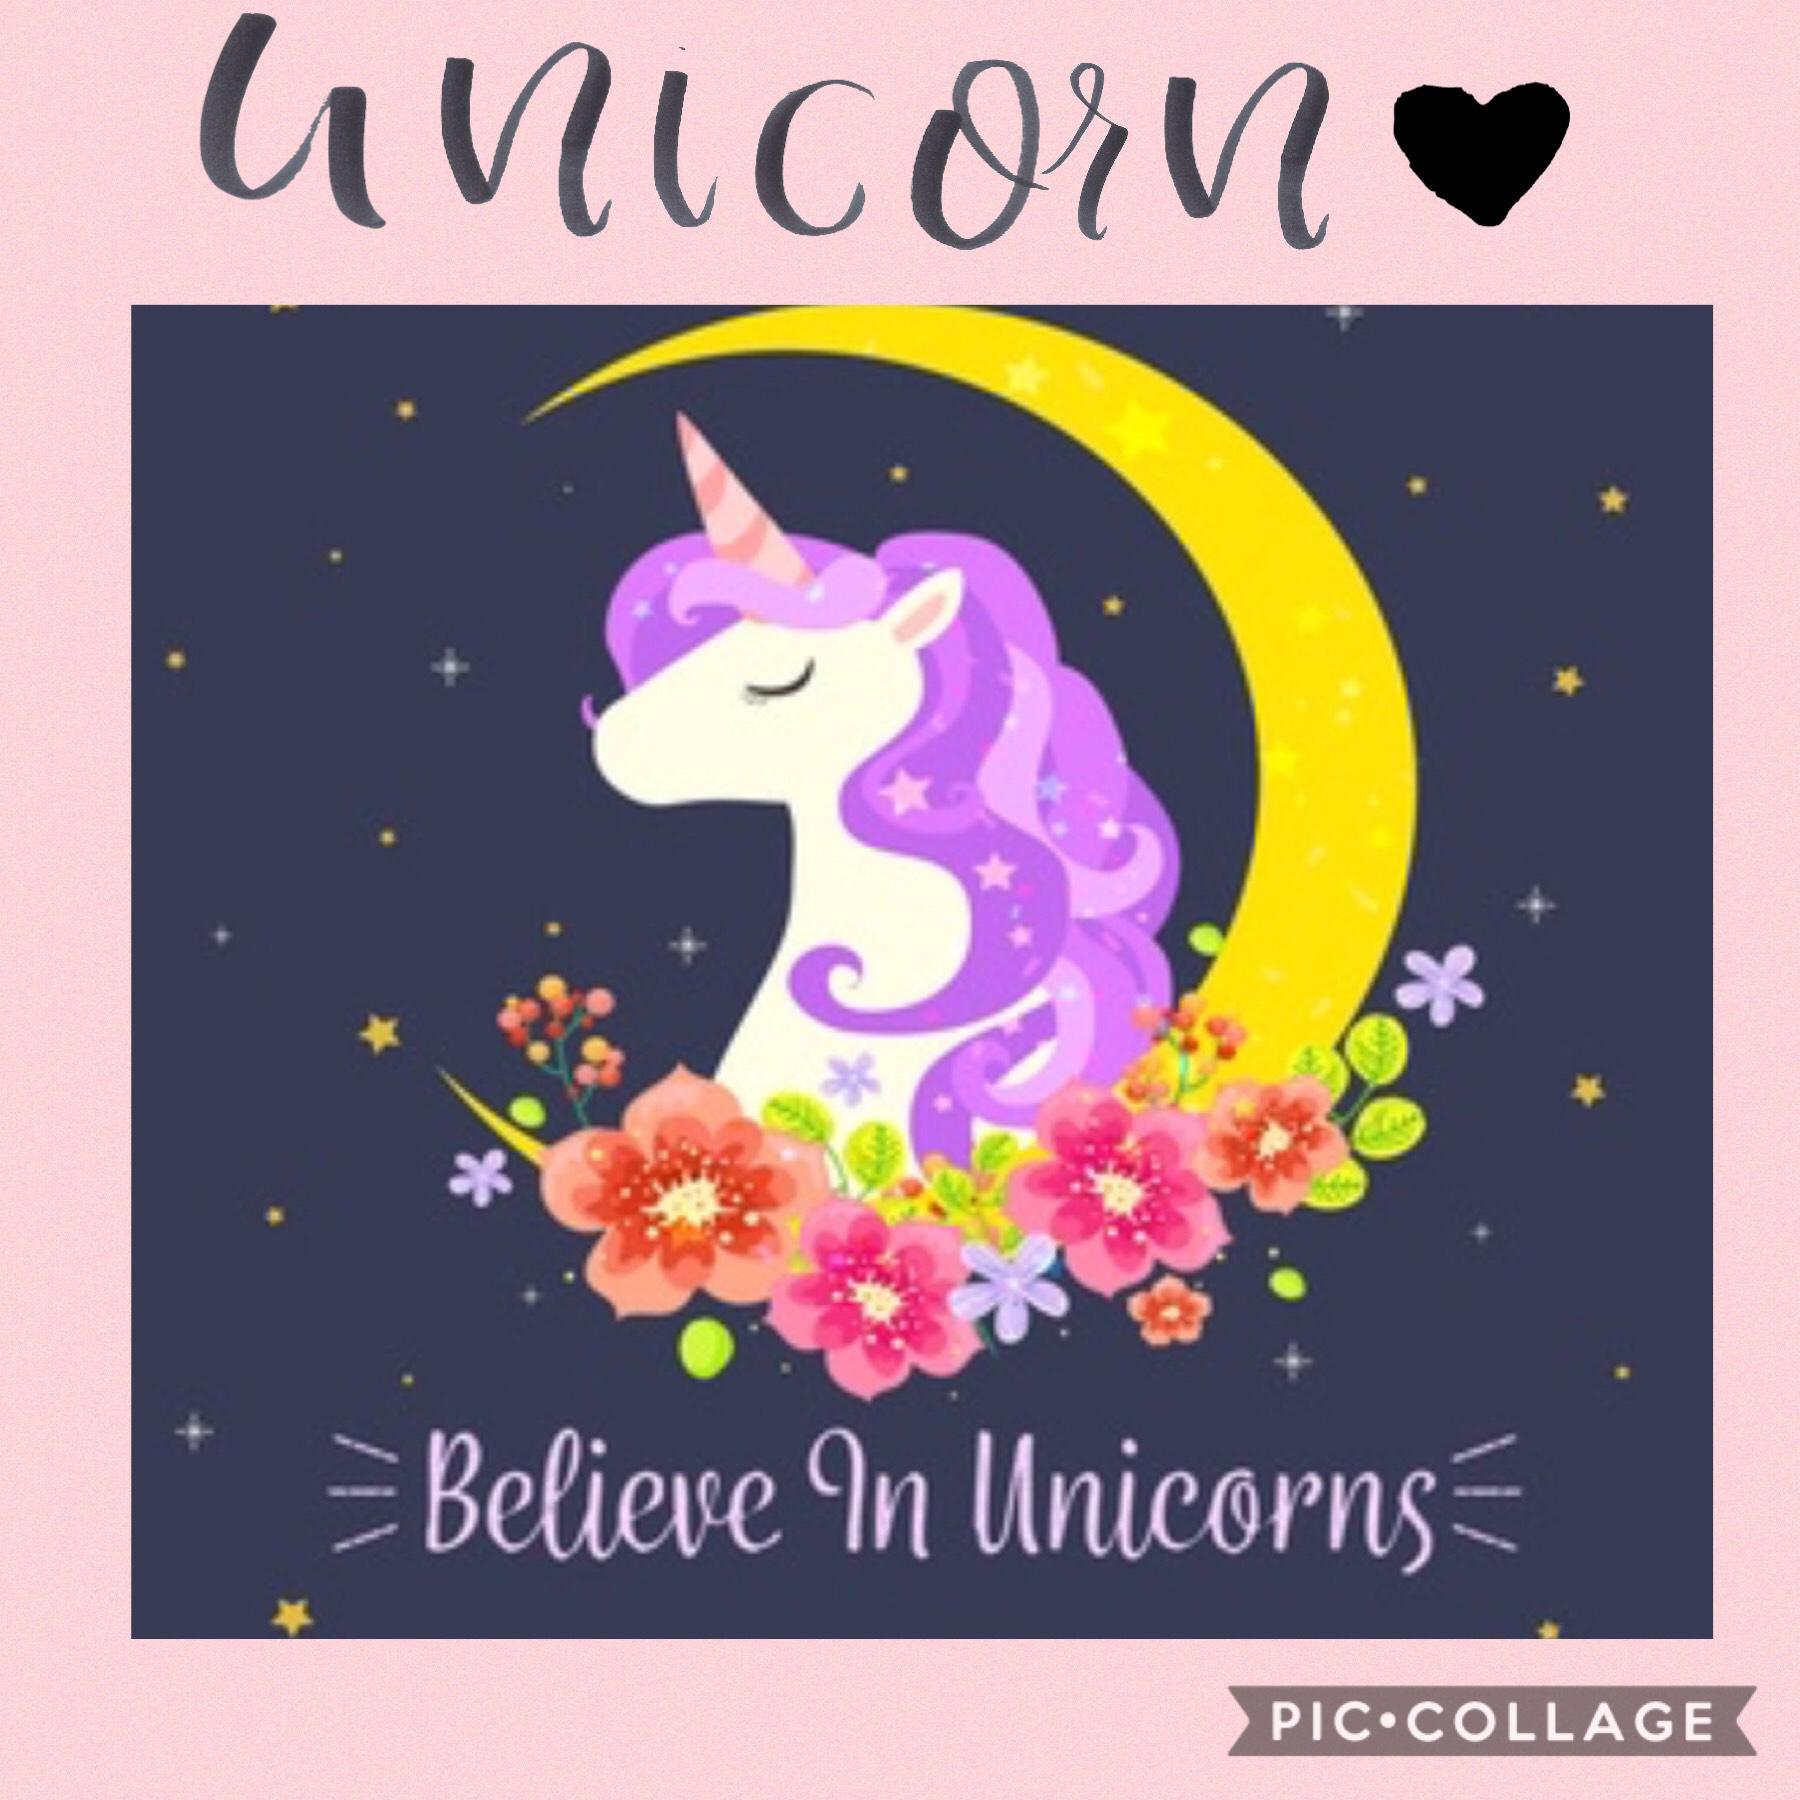 Unicorn 🦄 love ❤️ 